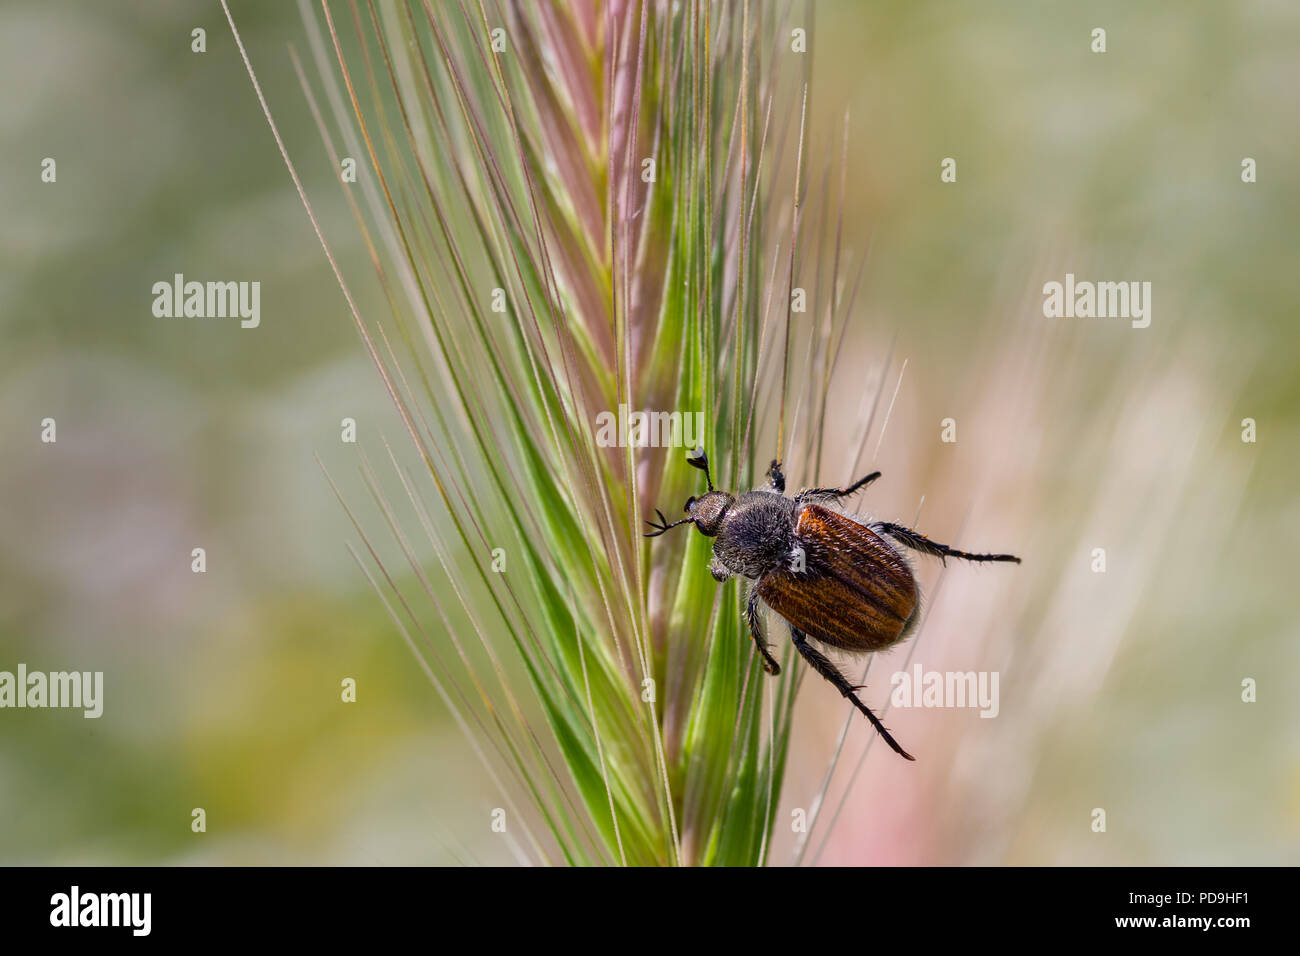 Beetle on a spike. Stock Photo